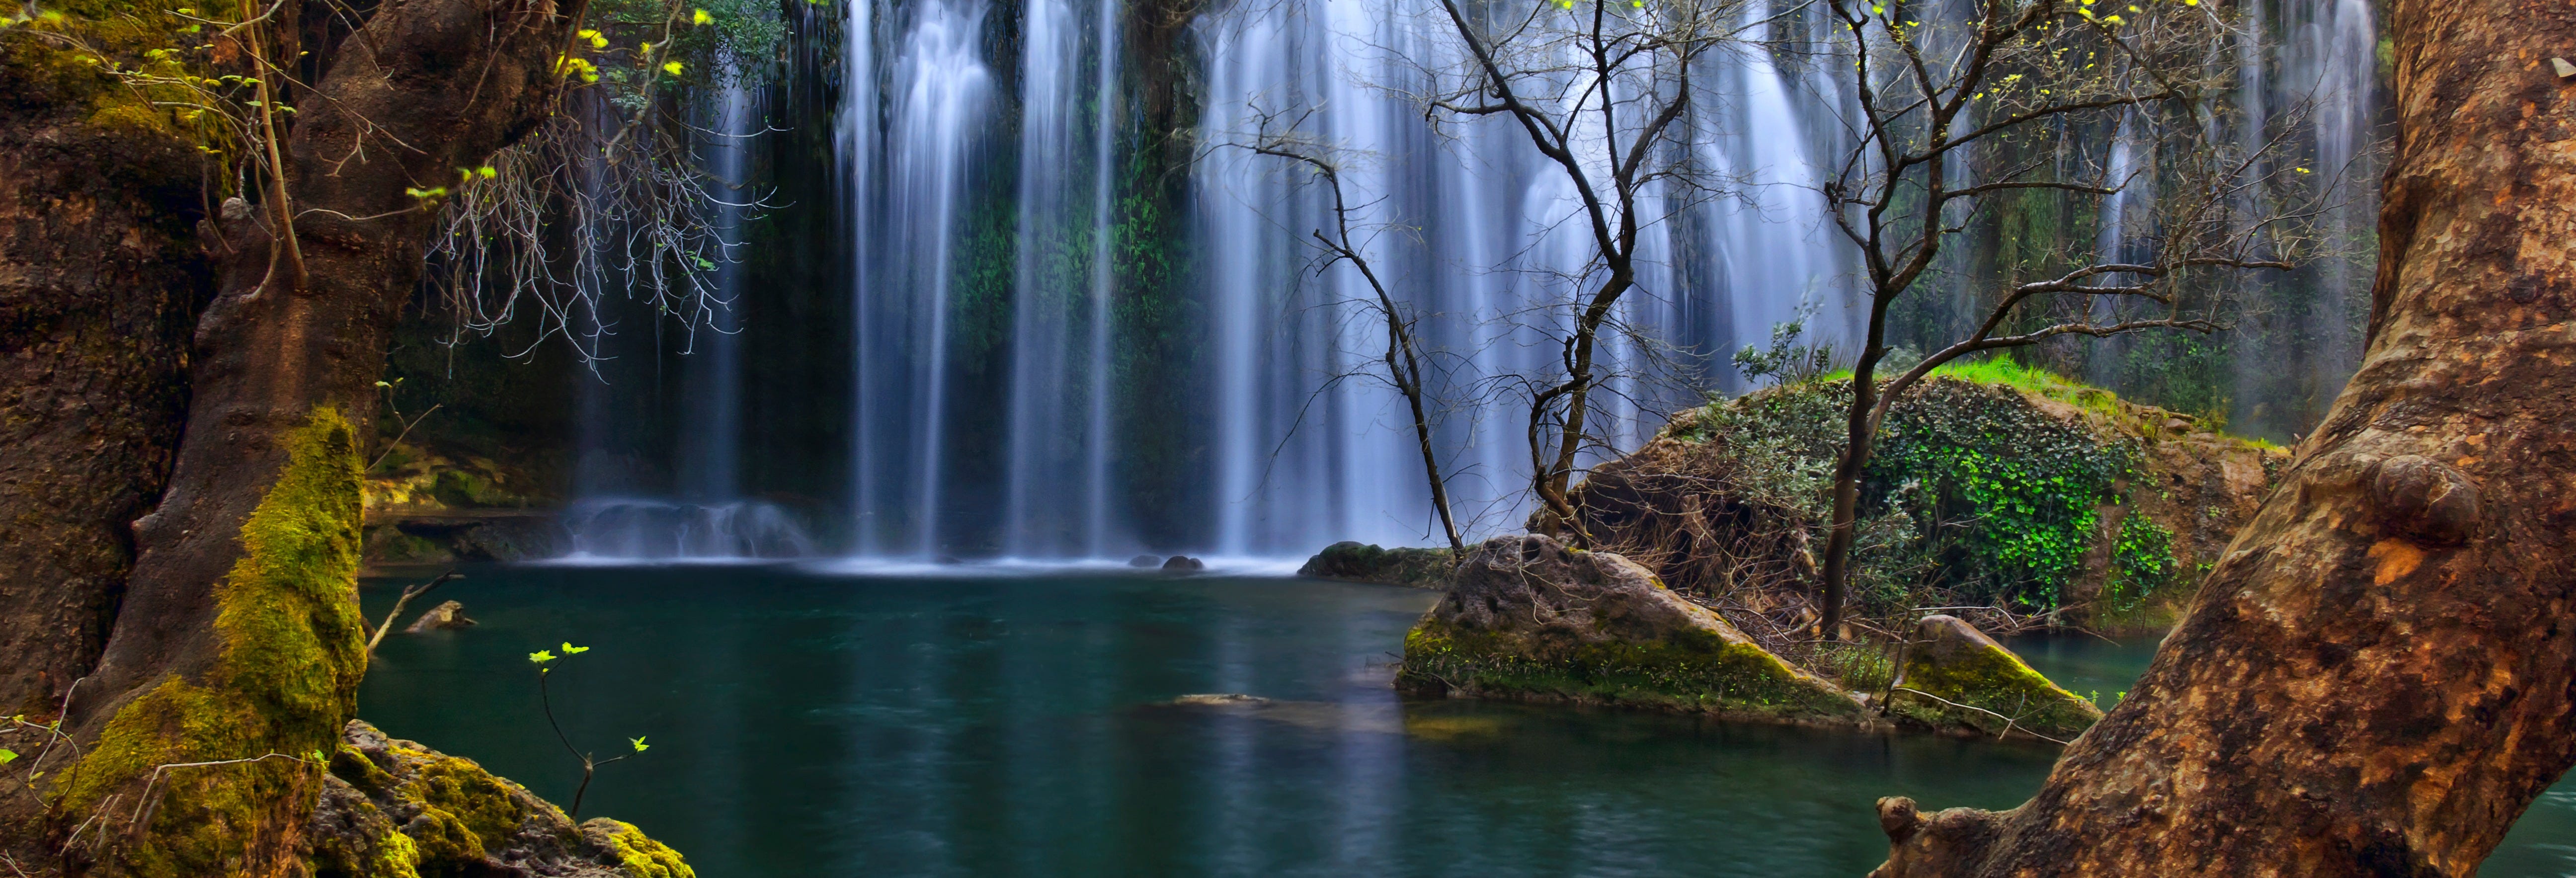 Excursion to Düden and Kursunlu Waterfalls